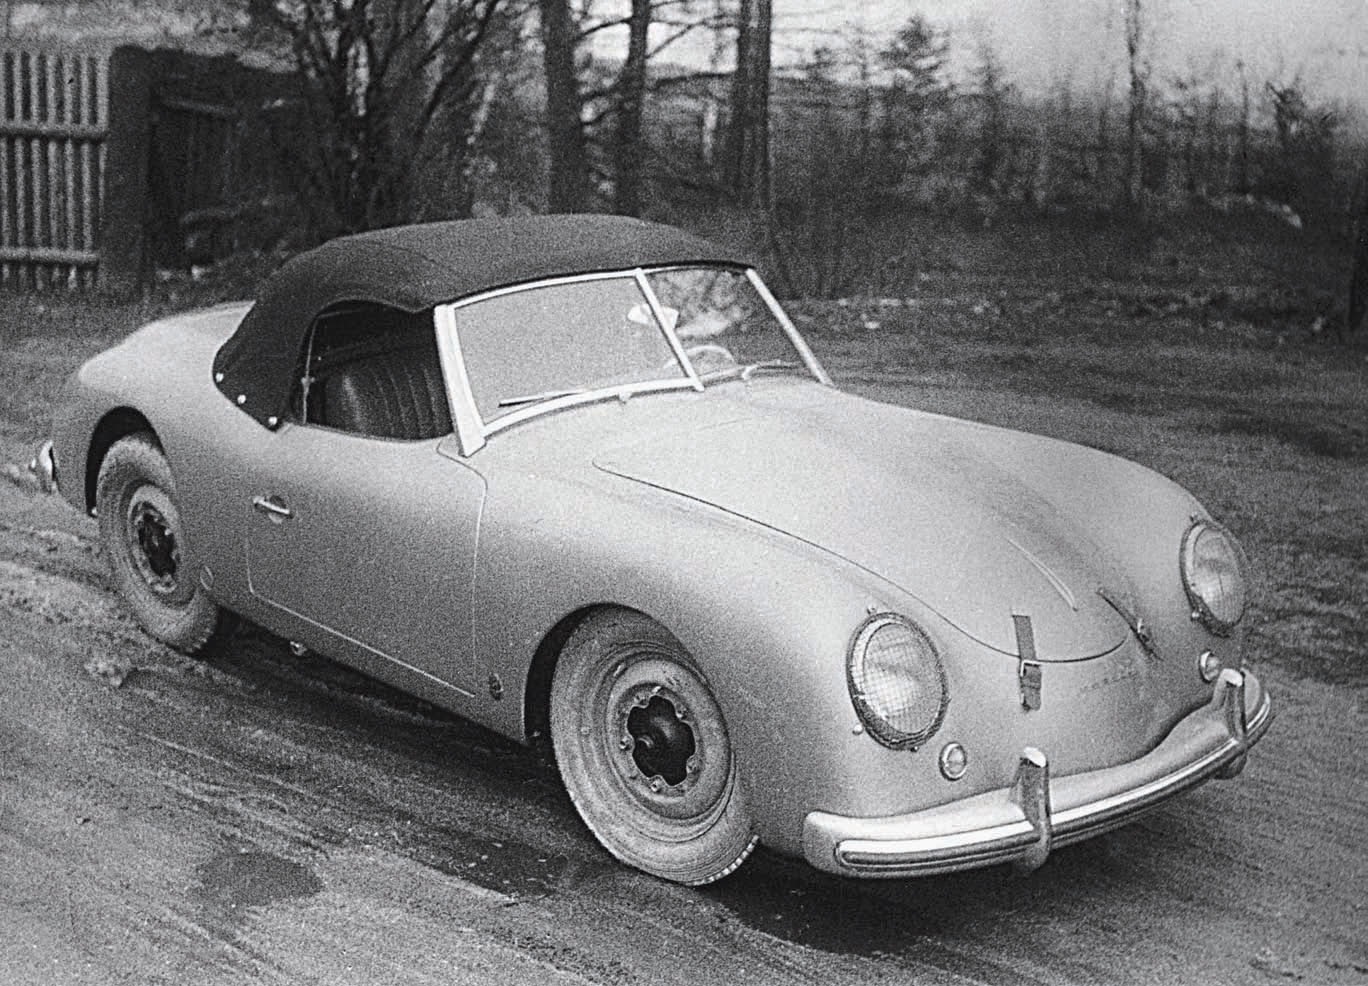 Porscheâs American distributor Max Hoffman was a Viennese native, but he understood his U.S. racing customers well. It was for them that he proposed a stripped and lightened roadster, and Ferry responded with the 1952â1953 America Roadster. Porsche Archiv